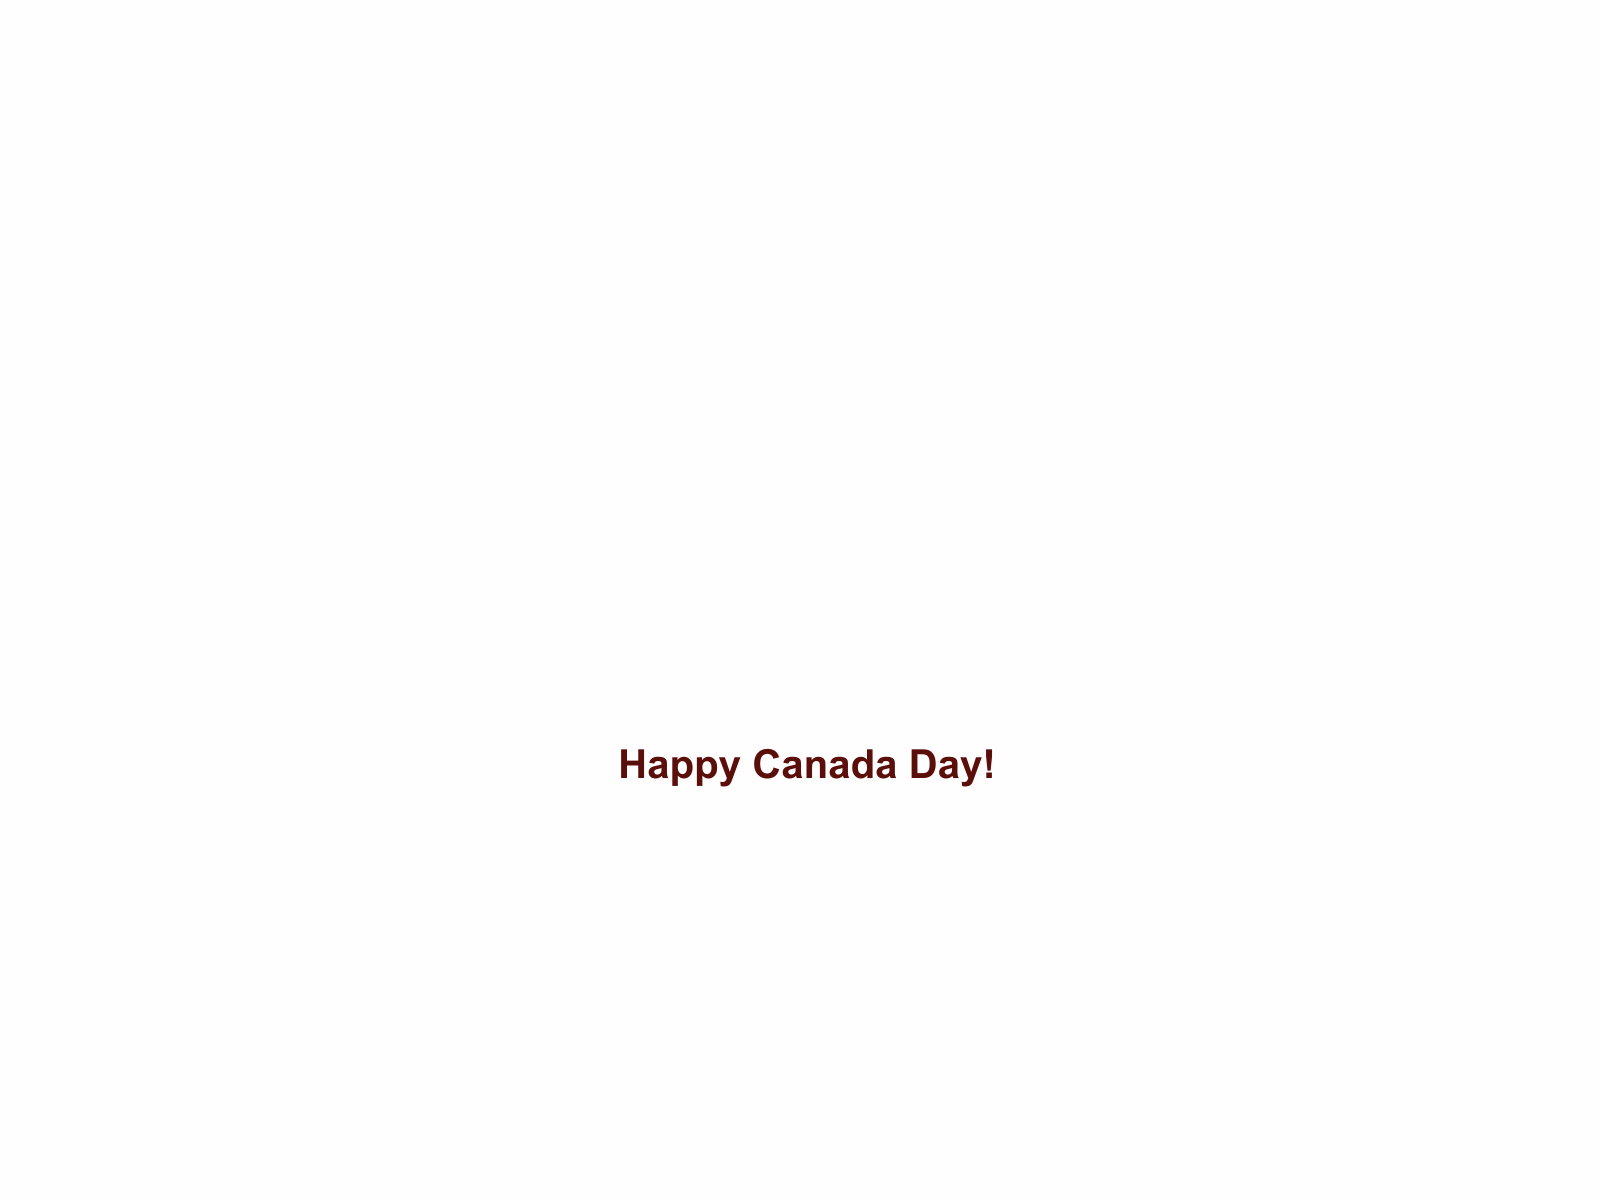 Happy Canada Day by Steve Raskin on Dribbble